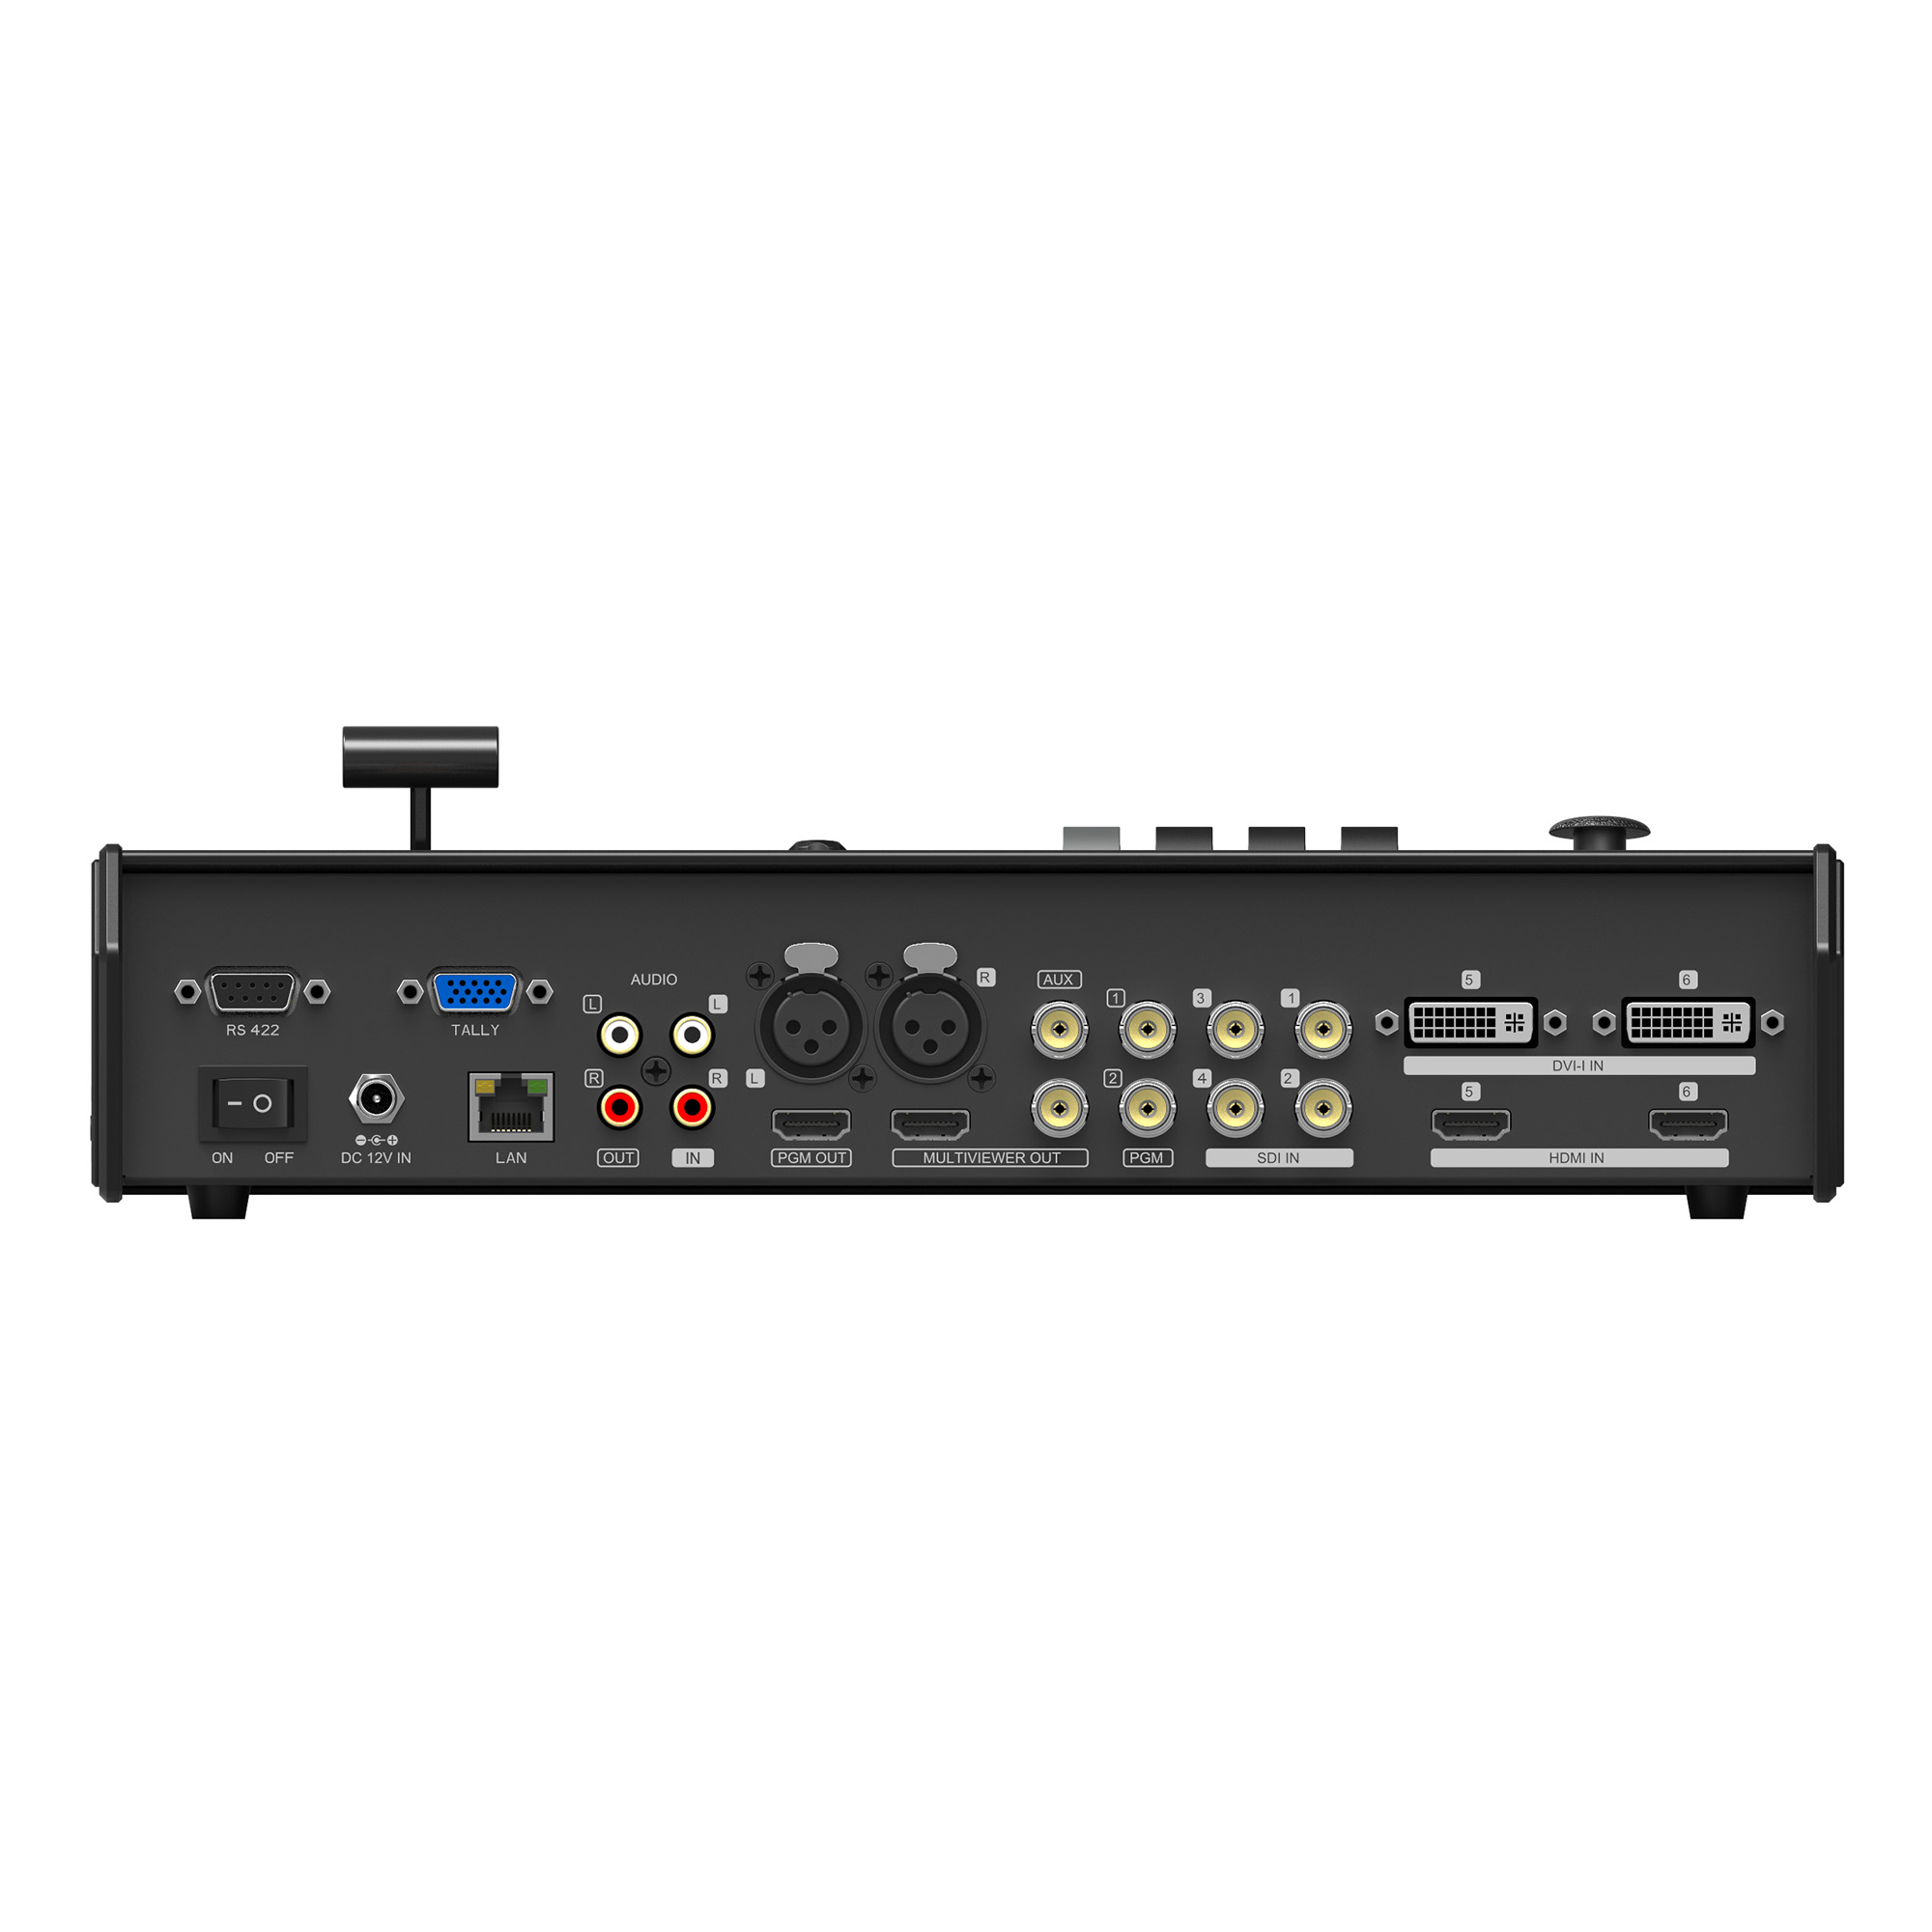 VS0605U - 6CH SDI/HDMI Multi-format Streaming Switcher